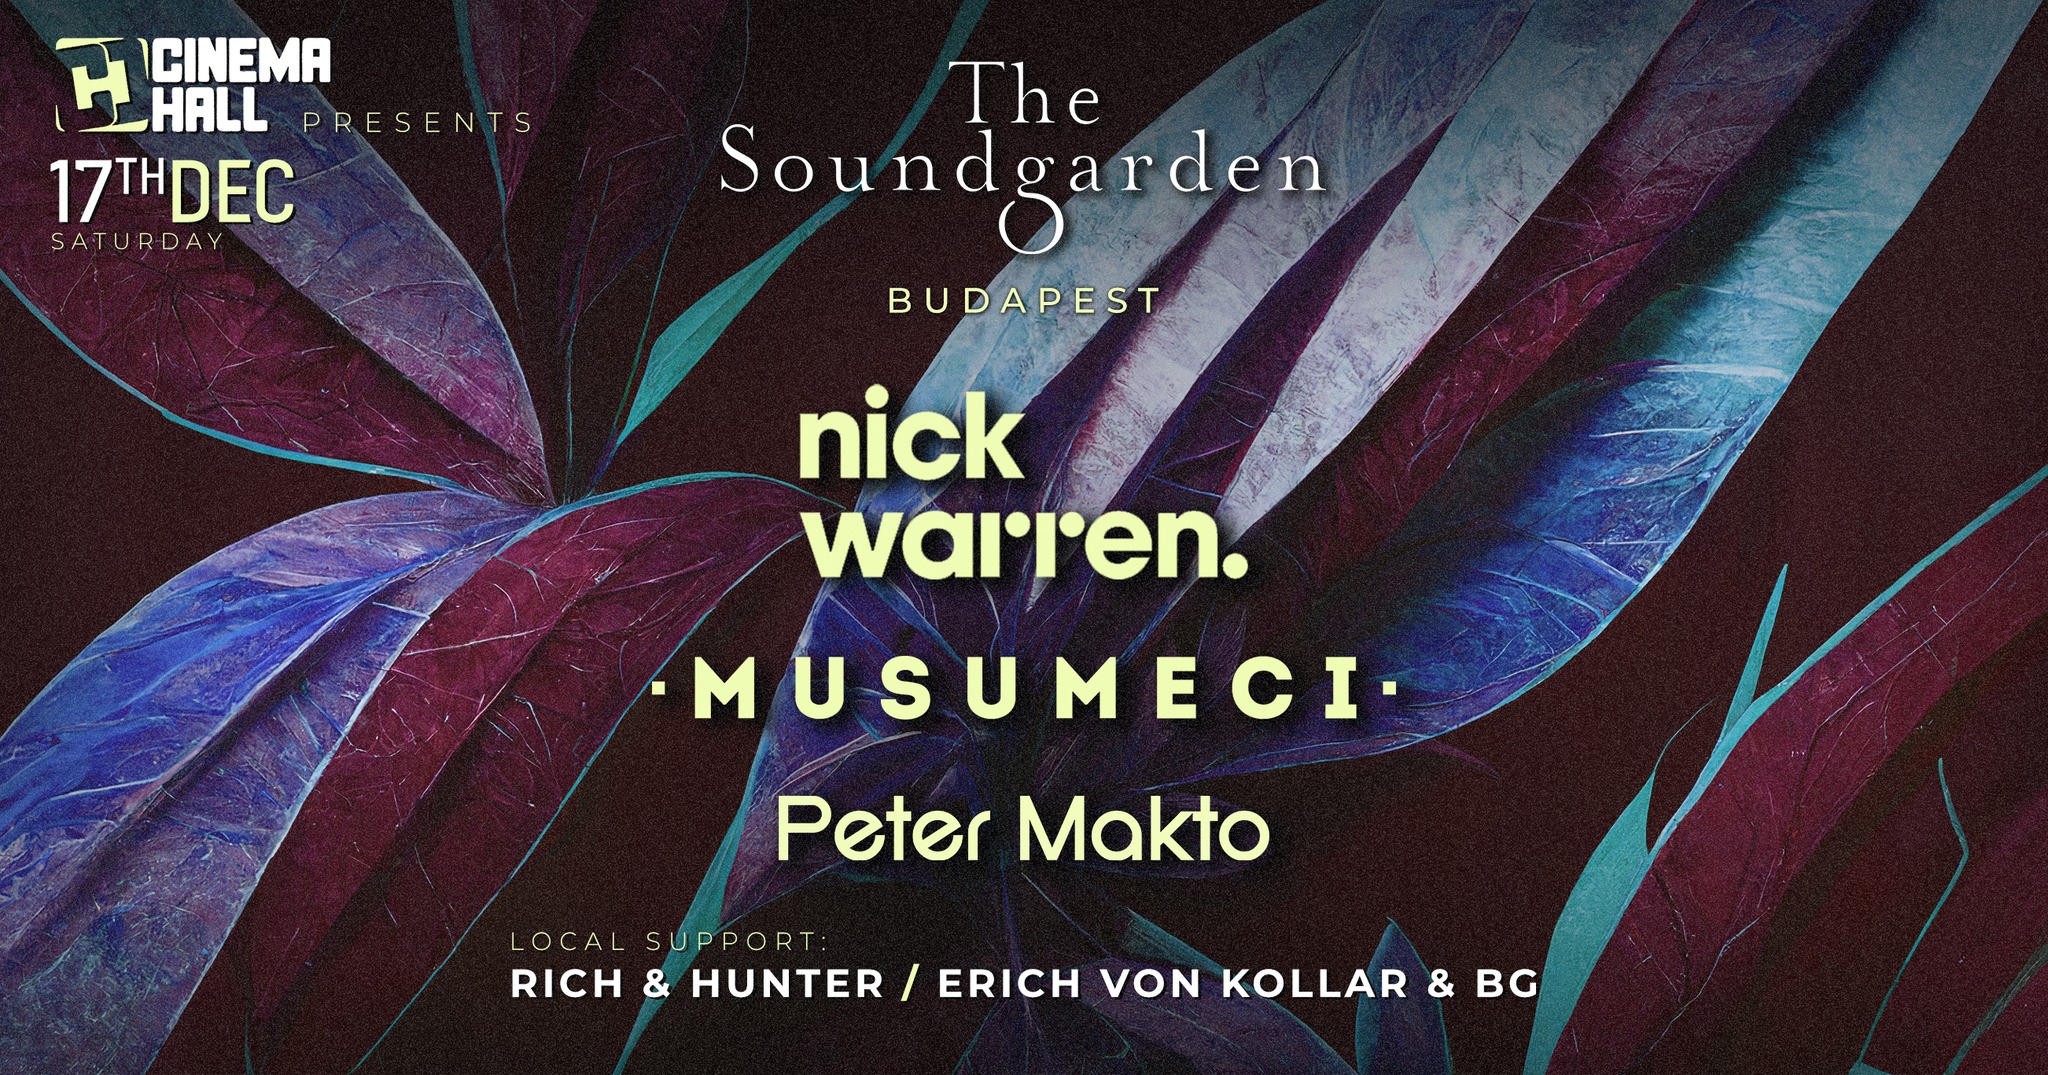 Soundgarden w/ Nick Warren & Musumeci & Peter Makto, Cinema Hall Budapest, 17 December